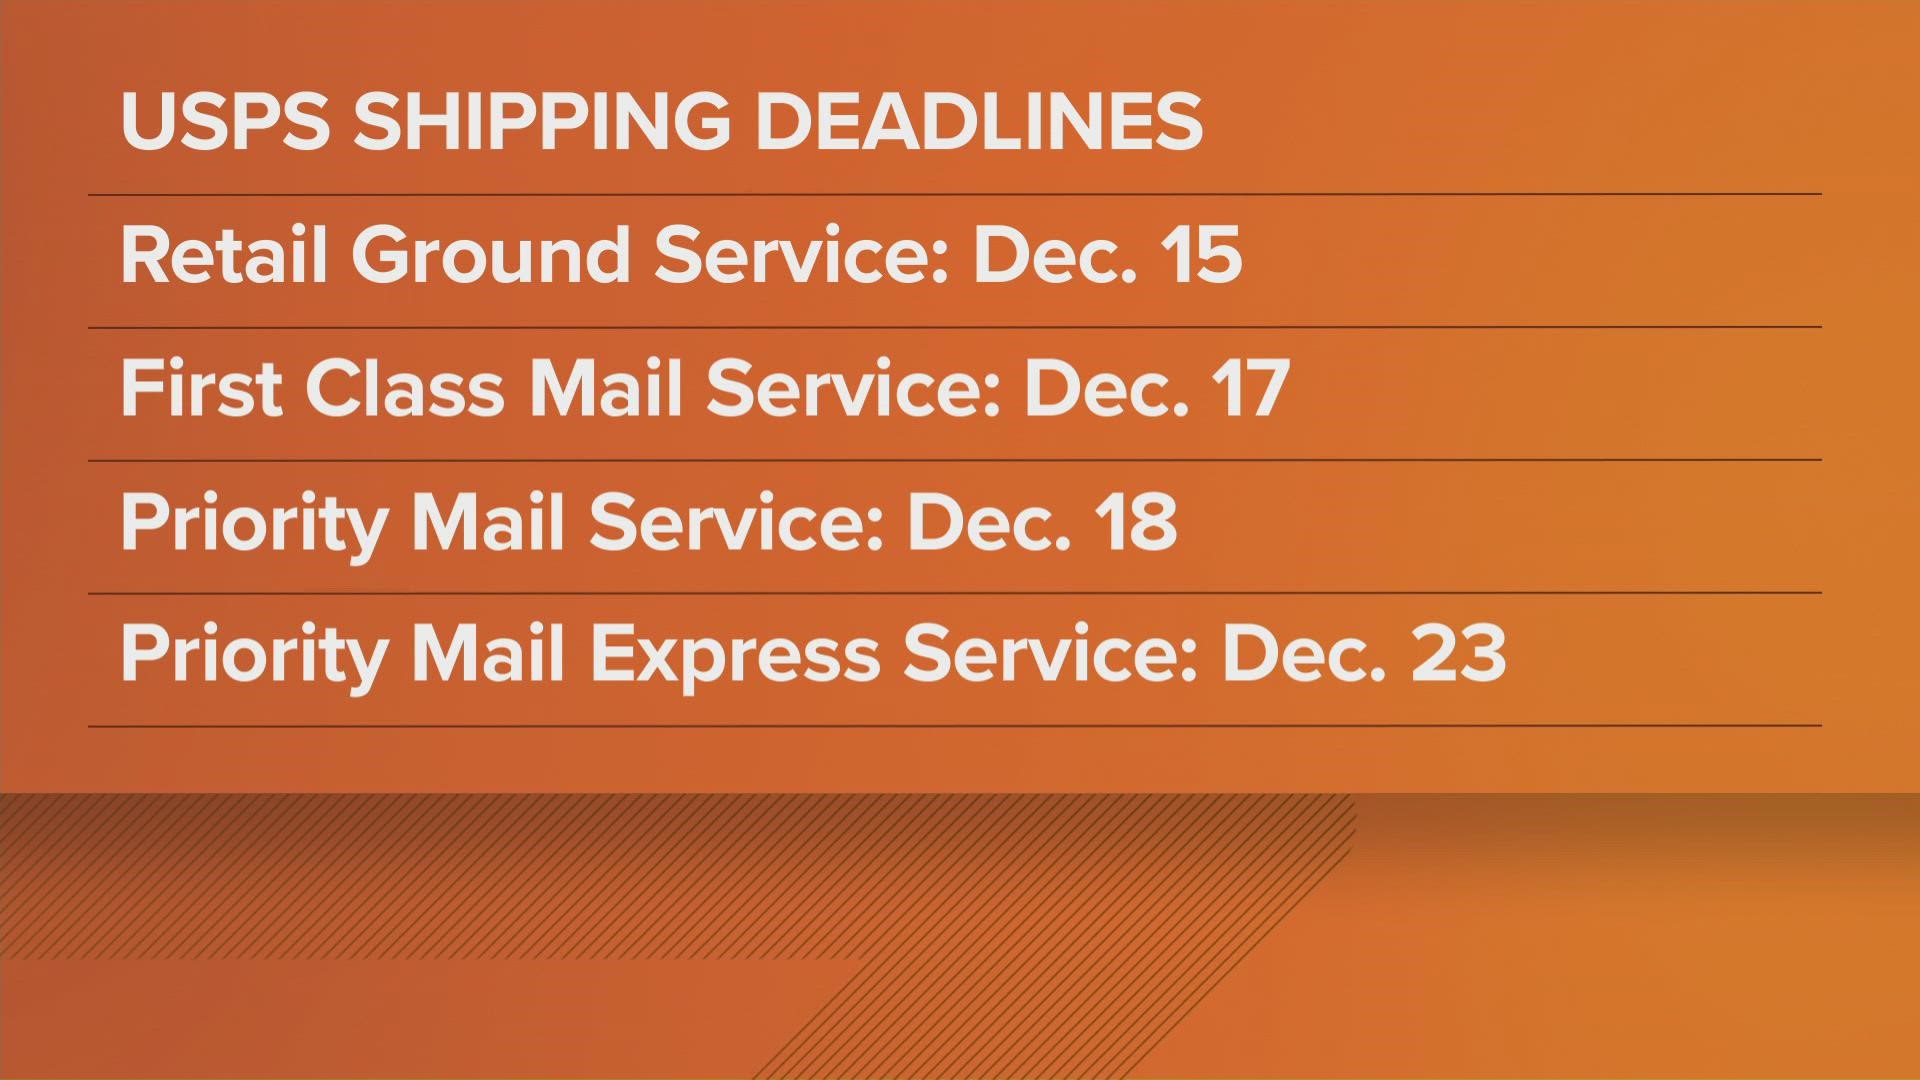 Expect shipping delays this holiday season.